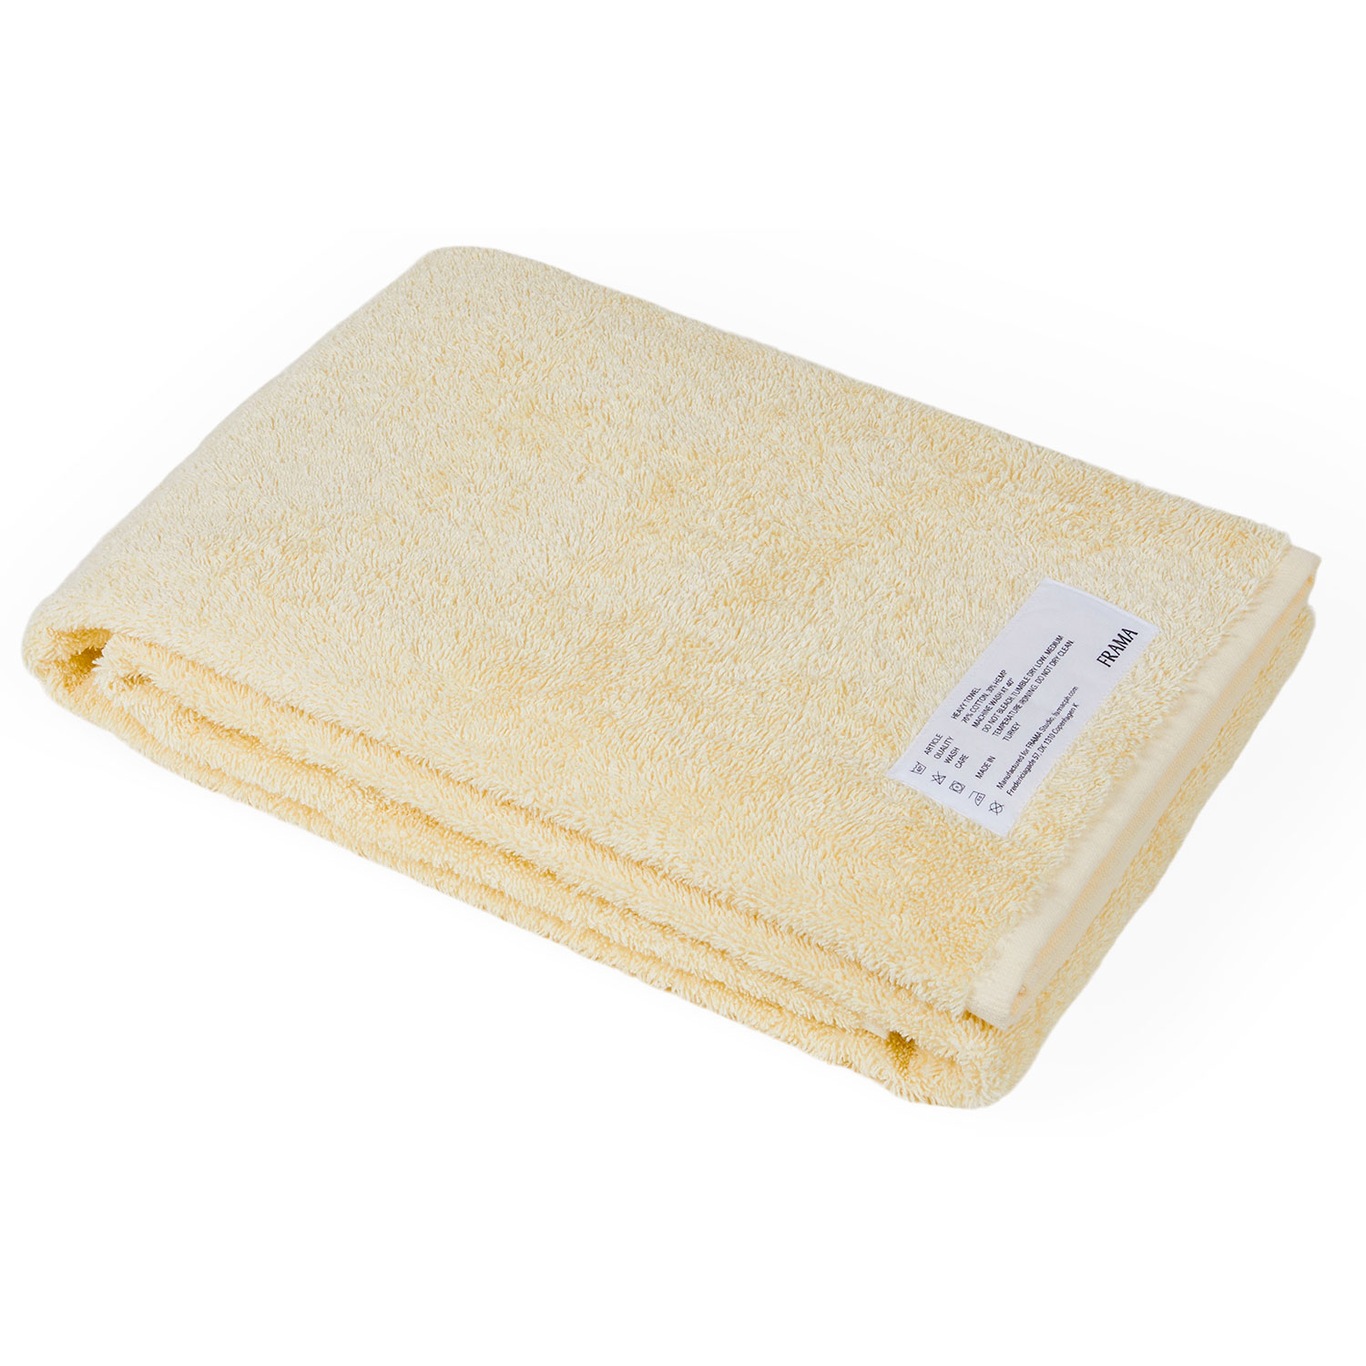 Heavy Towel Kylpypyyhe 70x140 cm, Pale Yellow